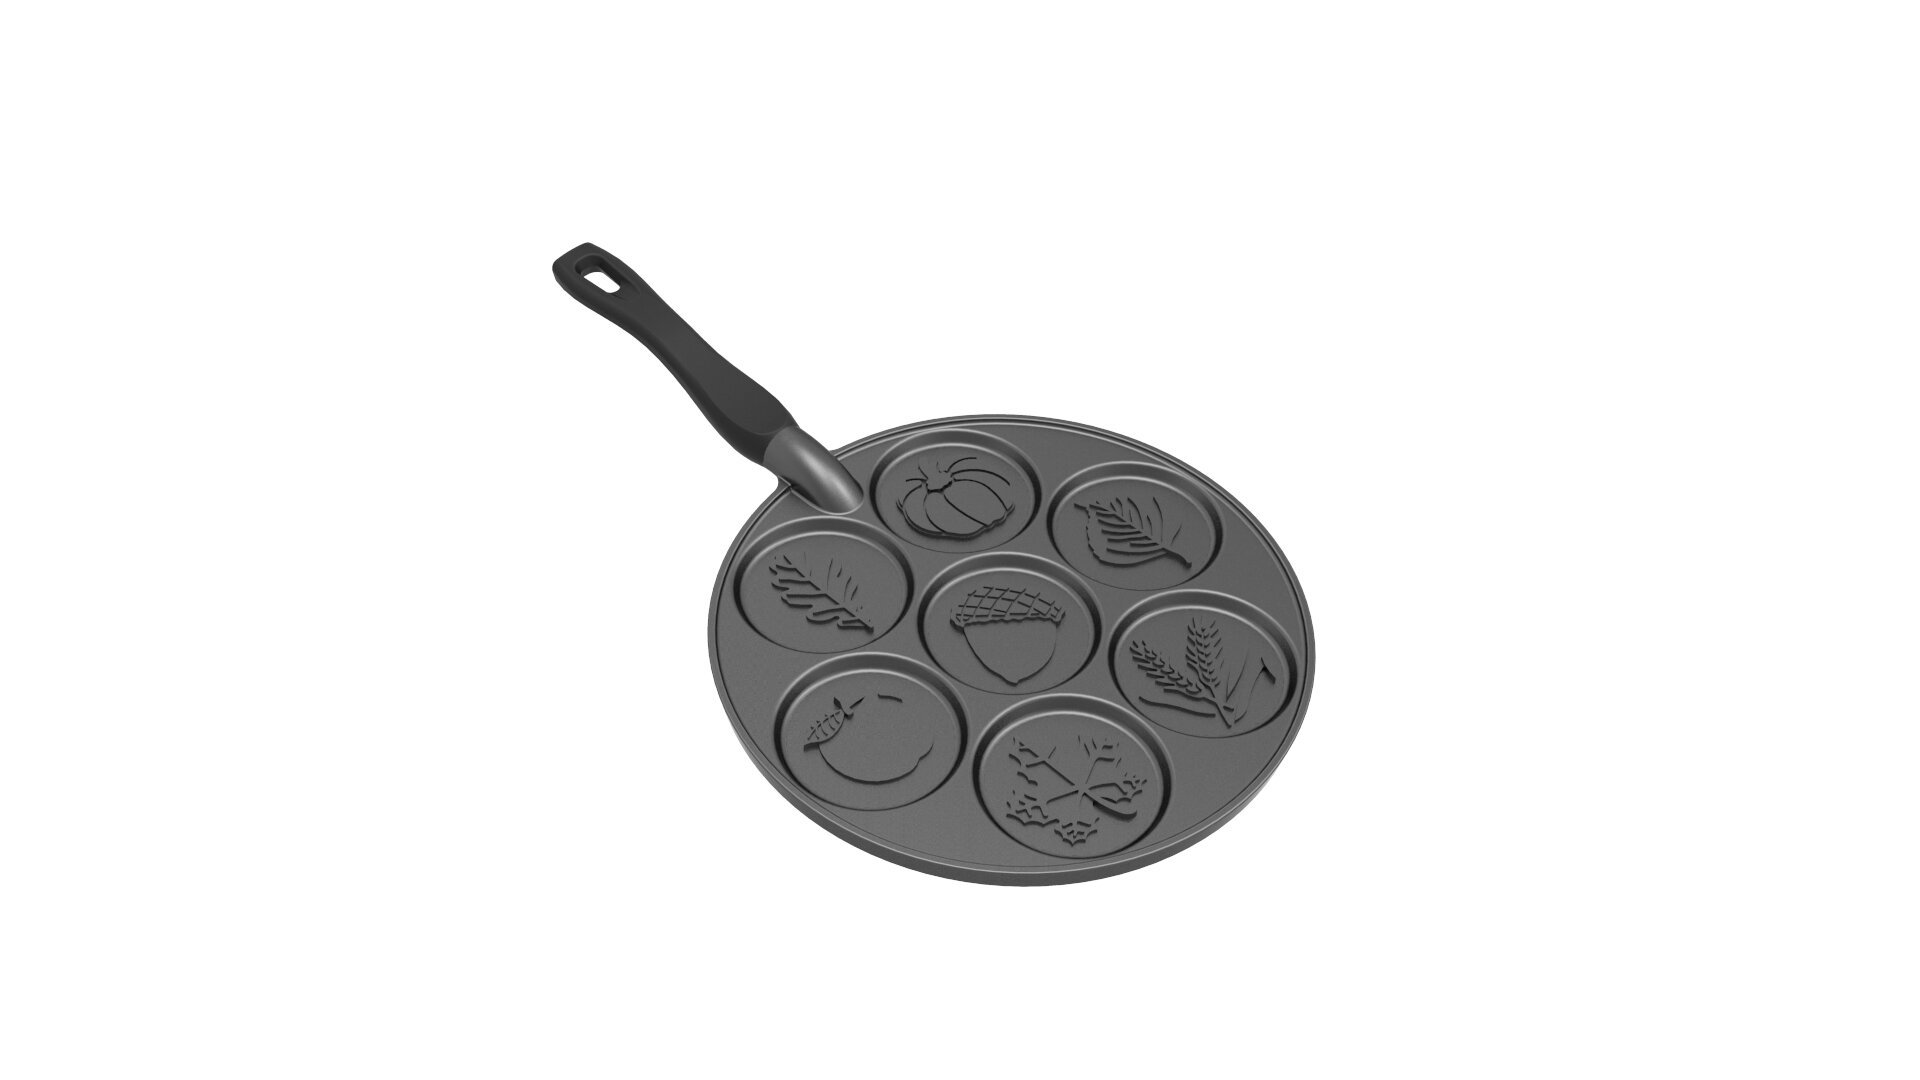 Nordic Ware Holiday Pancake Pan + Reviews